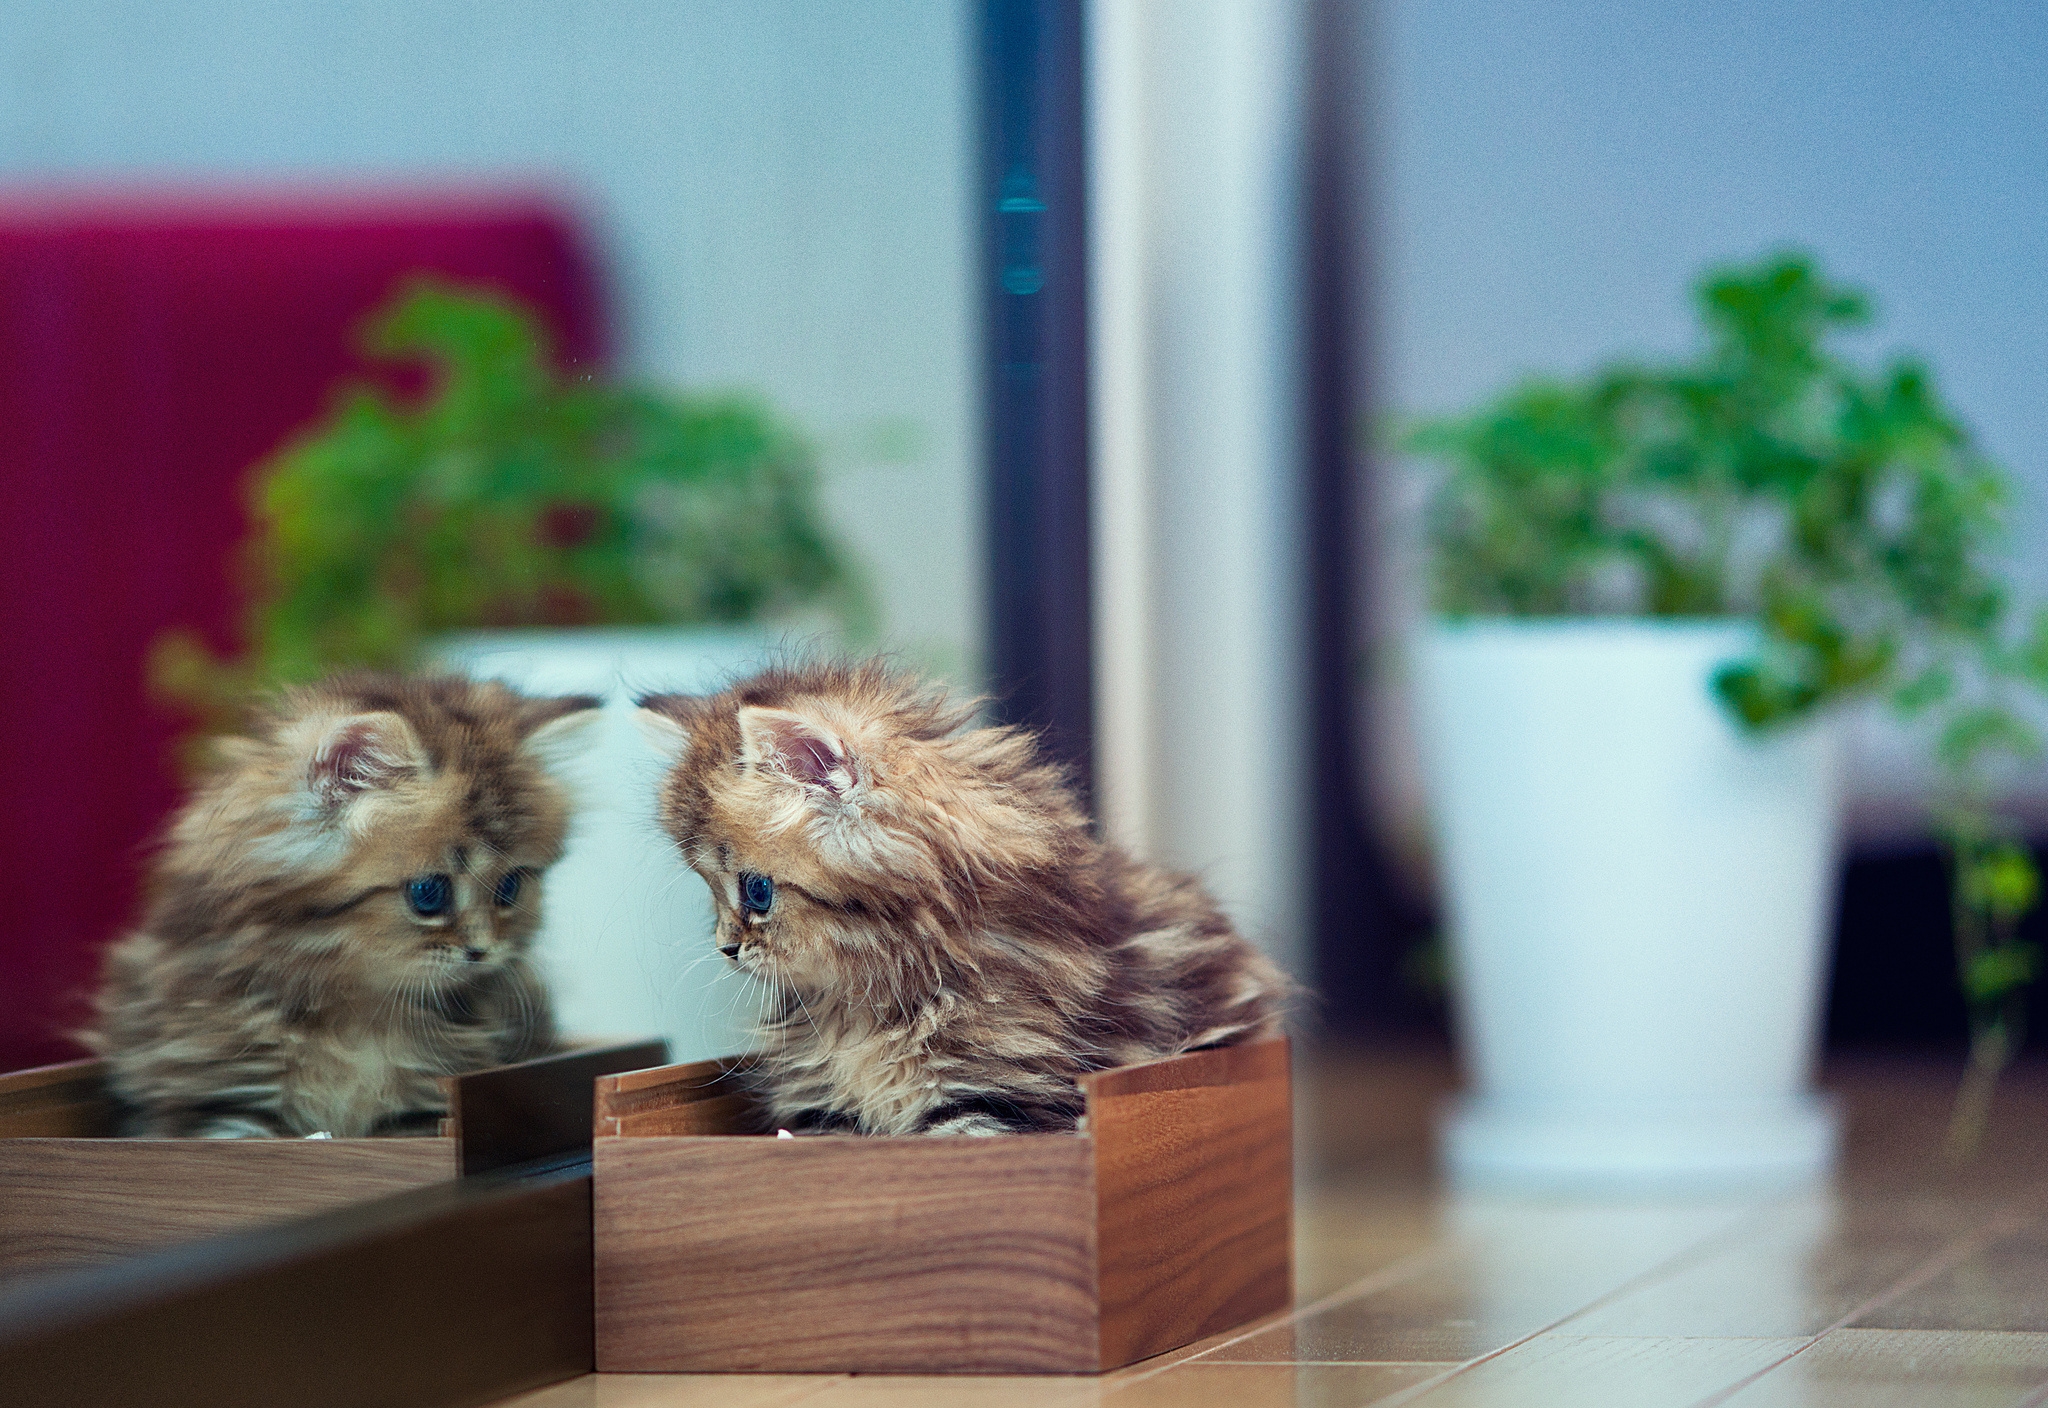 kitty, animals, reflection, flower, kitten, indoor plant, houseplant, mirror, casket